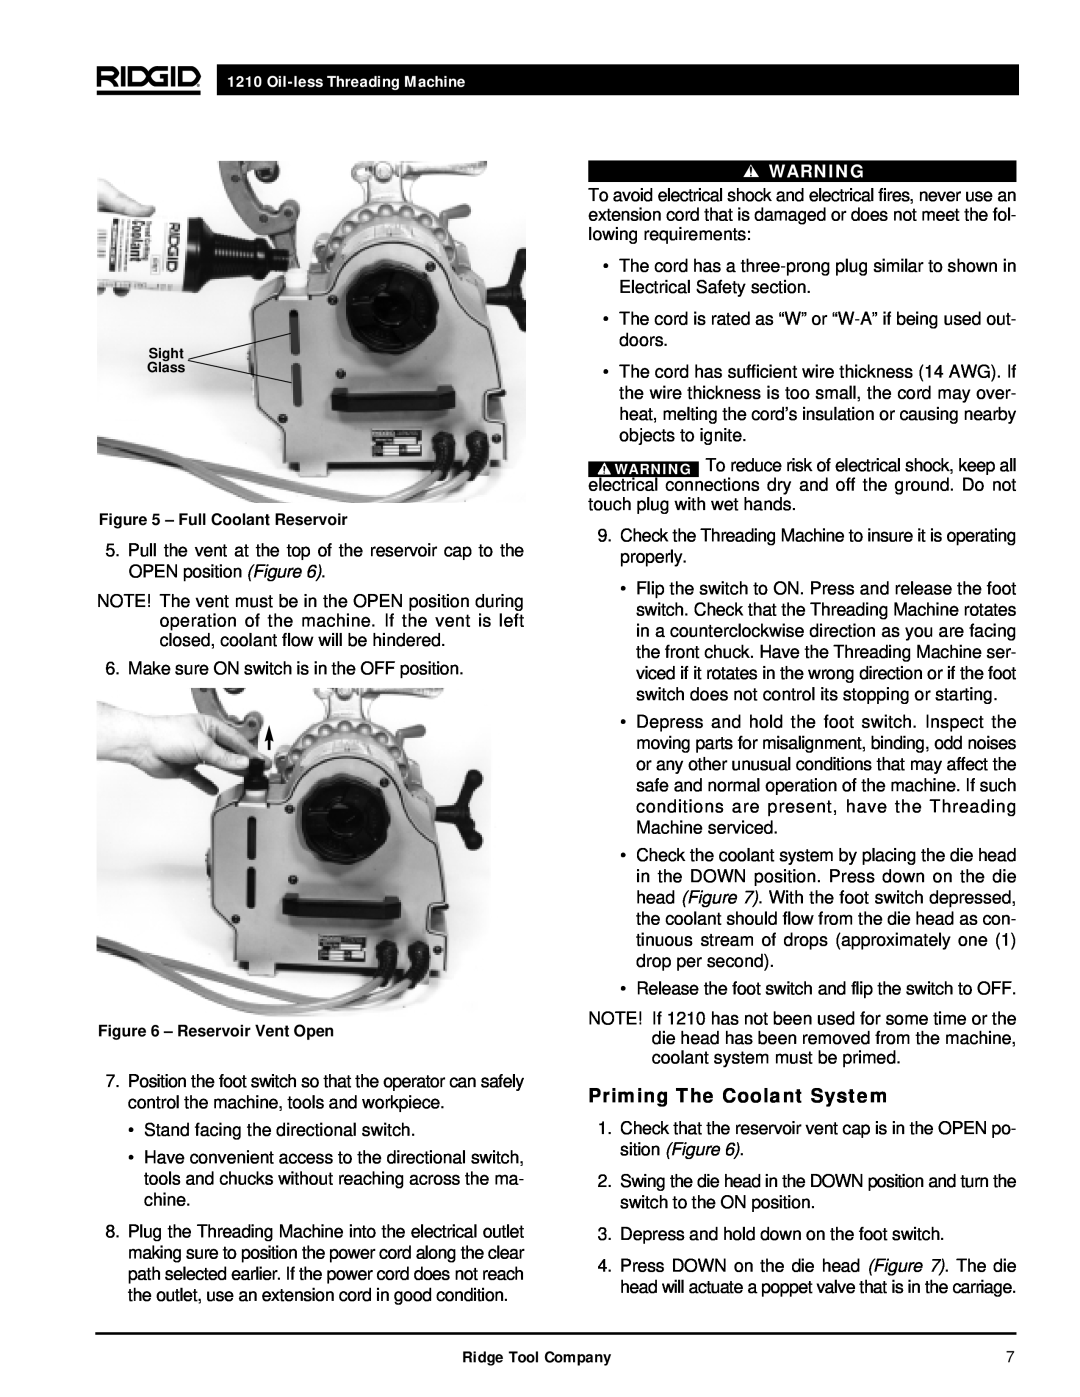 RIDGID 1210 manual Priming The Coolant System, Oil-less Threading Machine 